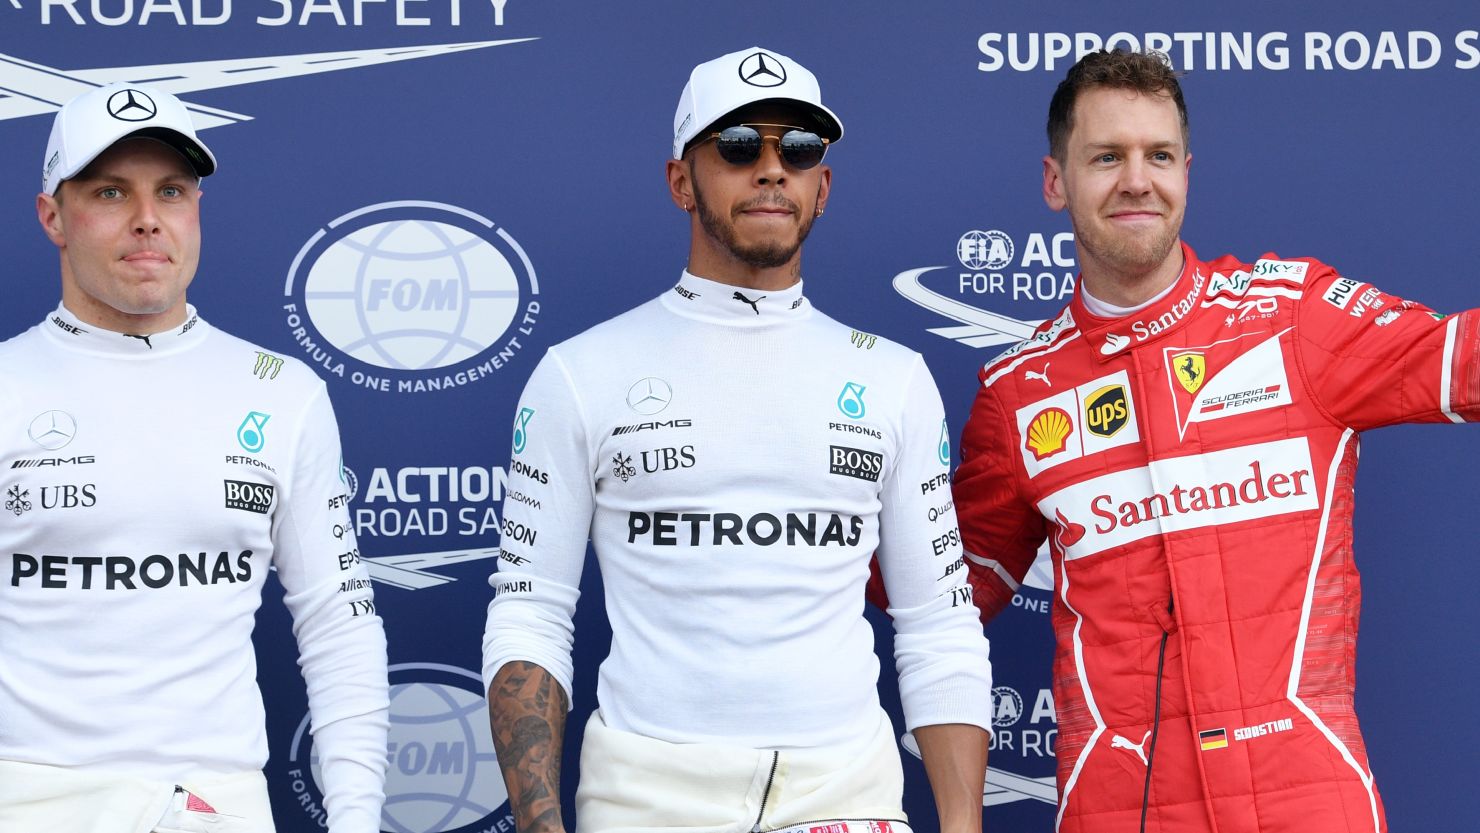 Lewis Hamilton claimed pole for Mercedes ahead of Ferrari's Sebastian Vettel (right) with teammate Valtteri Bottas third fastest.